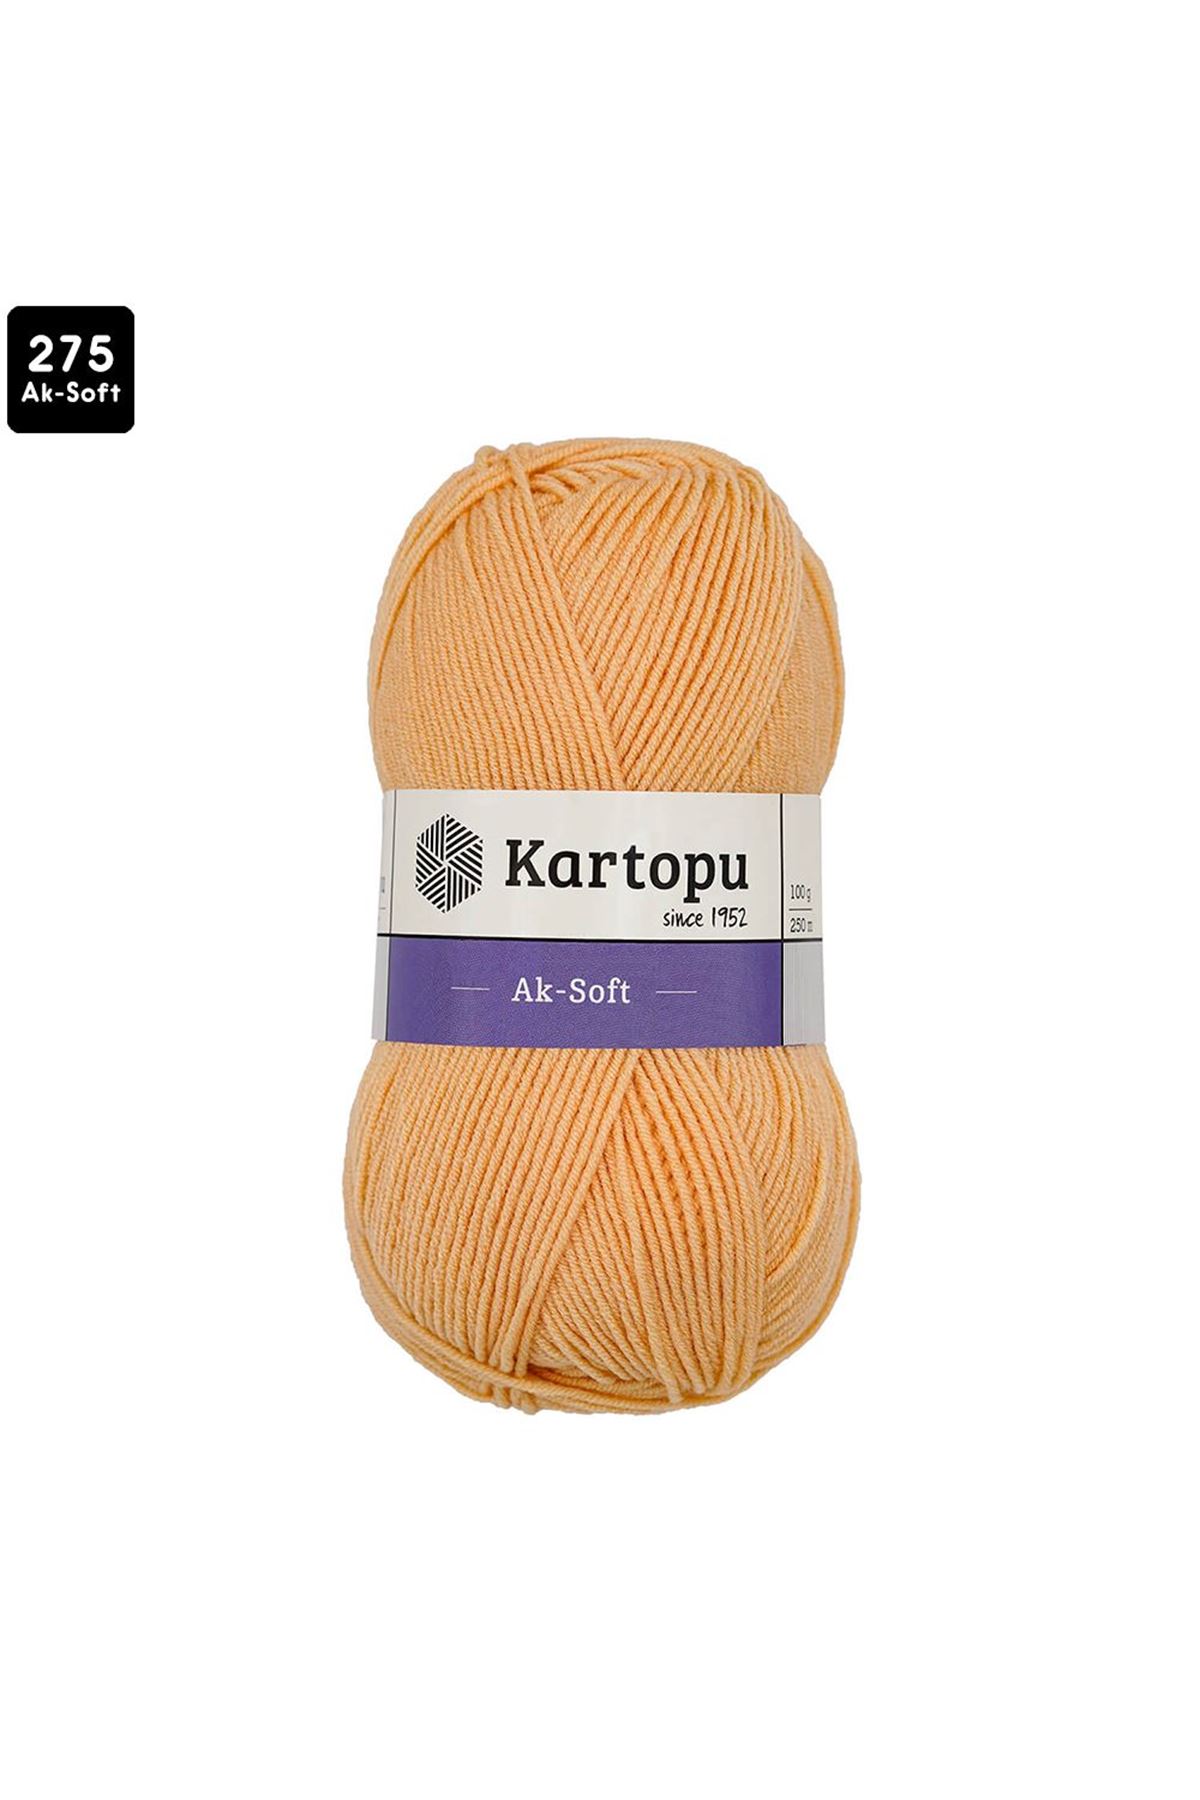 Kartopu Ak-Soft Renk No:275